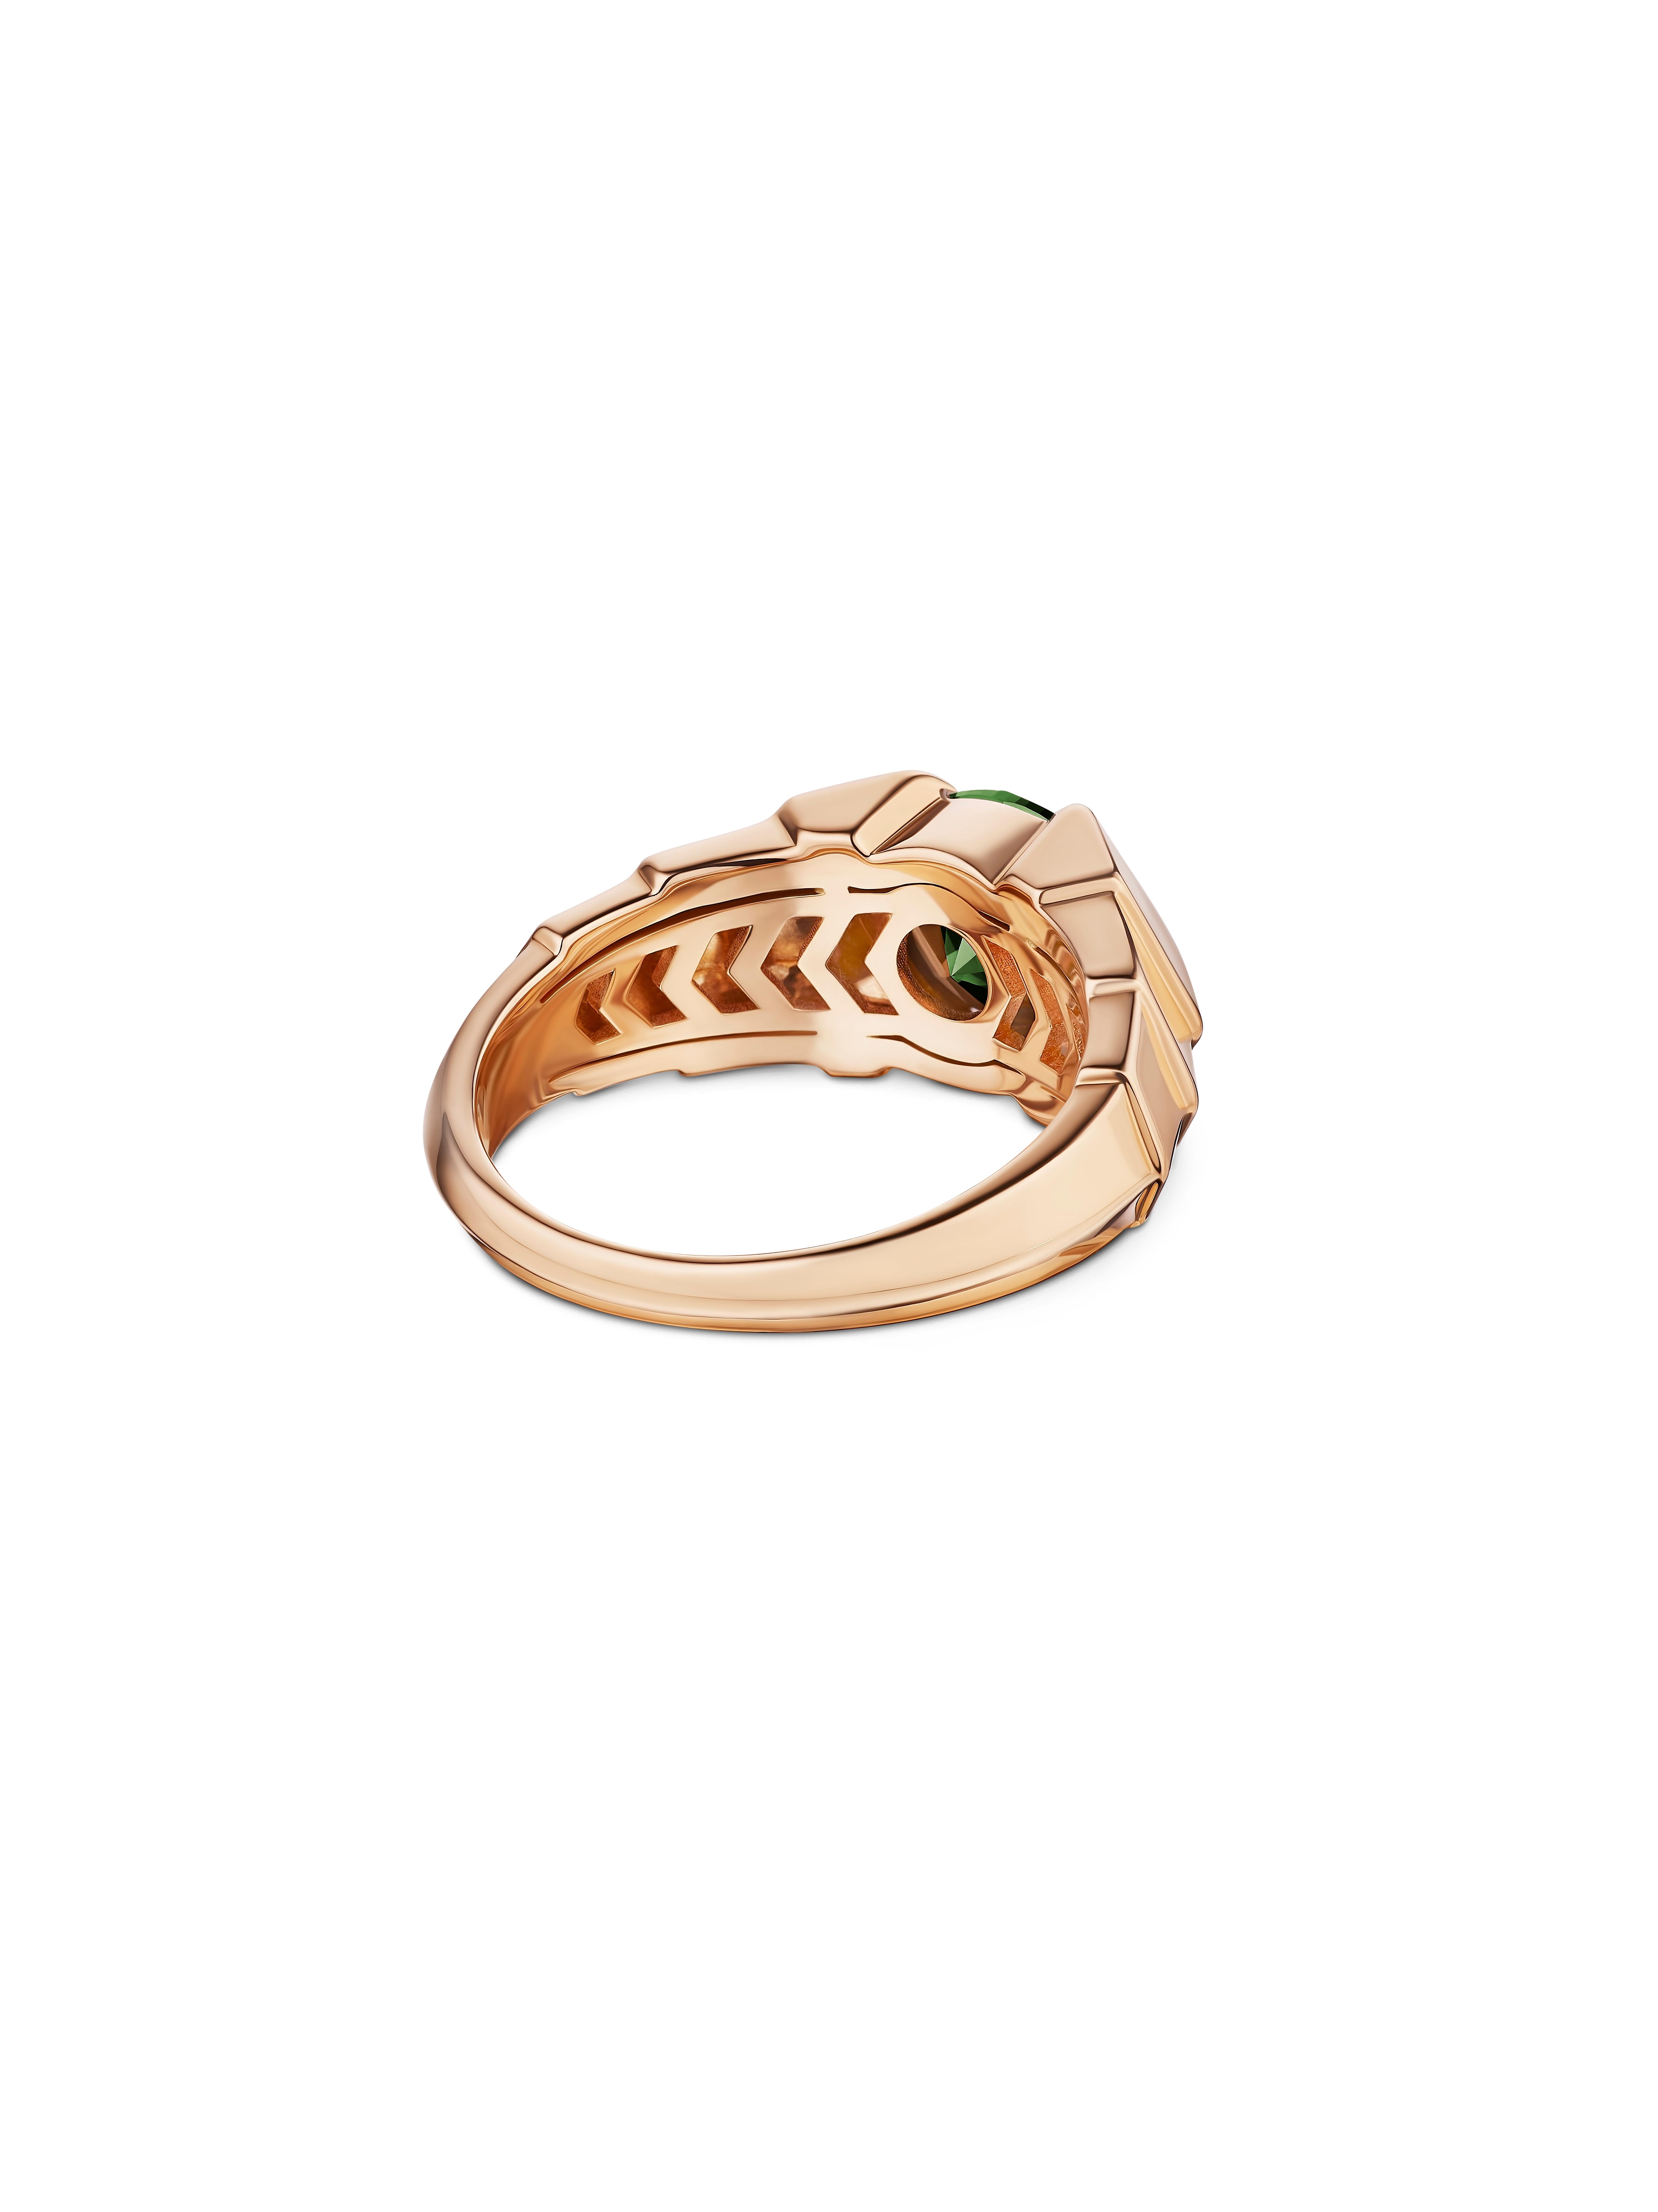 For Sale:  VL Cepher Green Tourmaline 18K Rose Gold Diamond Halo Arris Large Ring 2